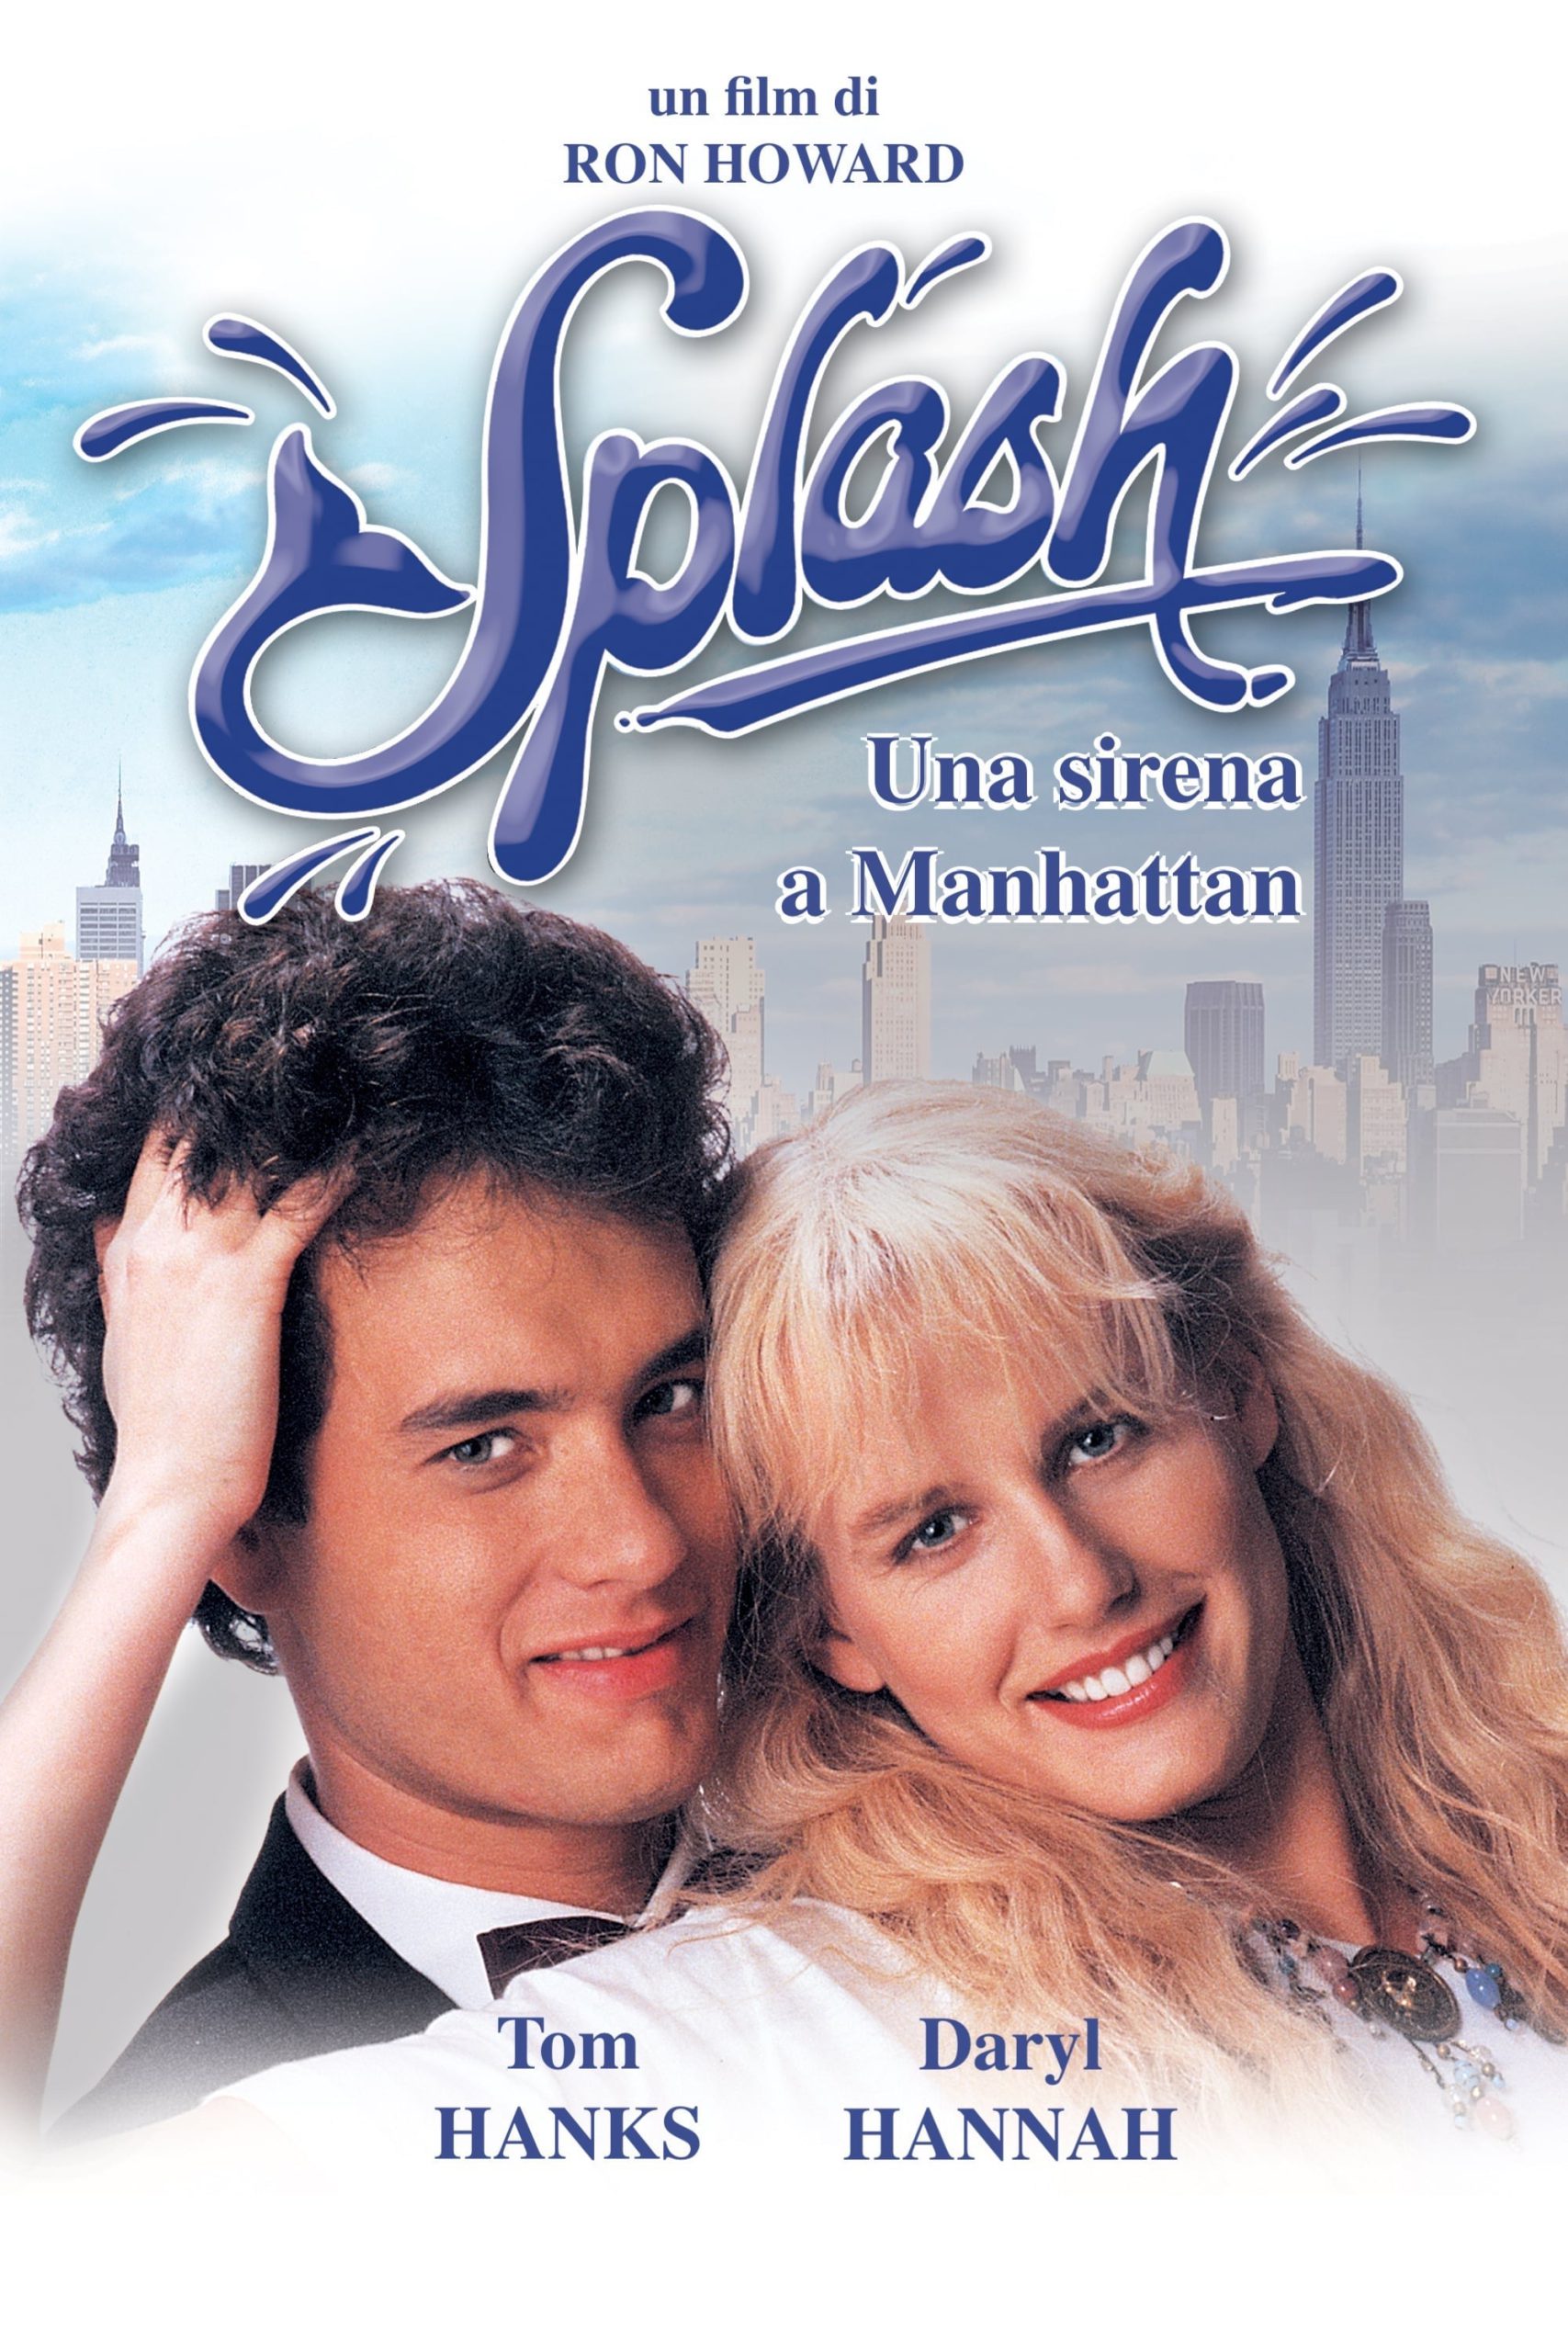 Splash – Una sirena a Manhattan [HD] (1984)